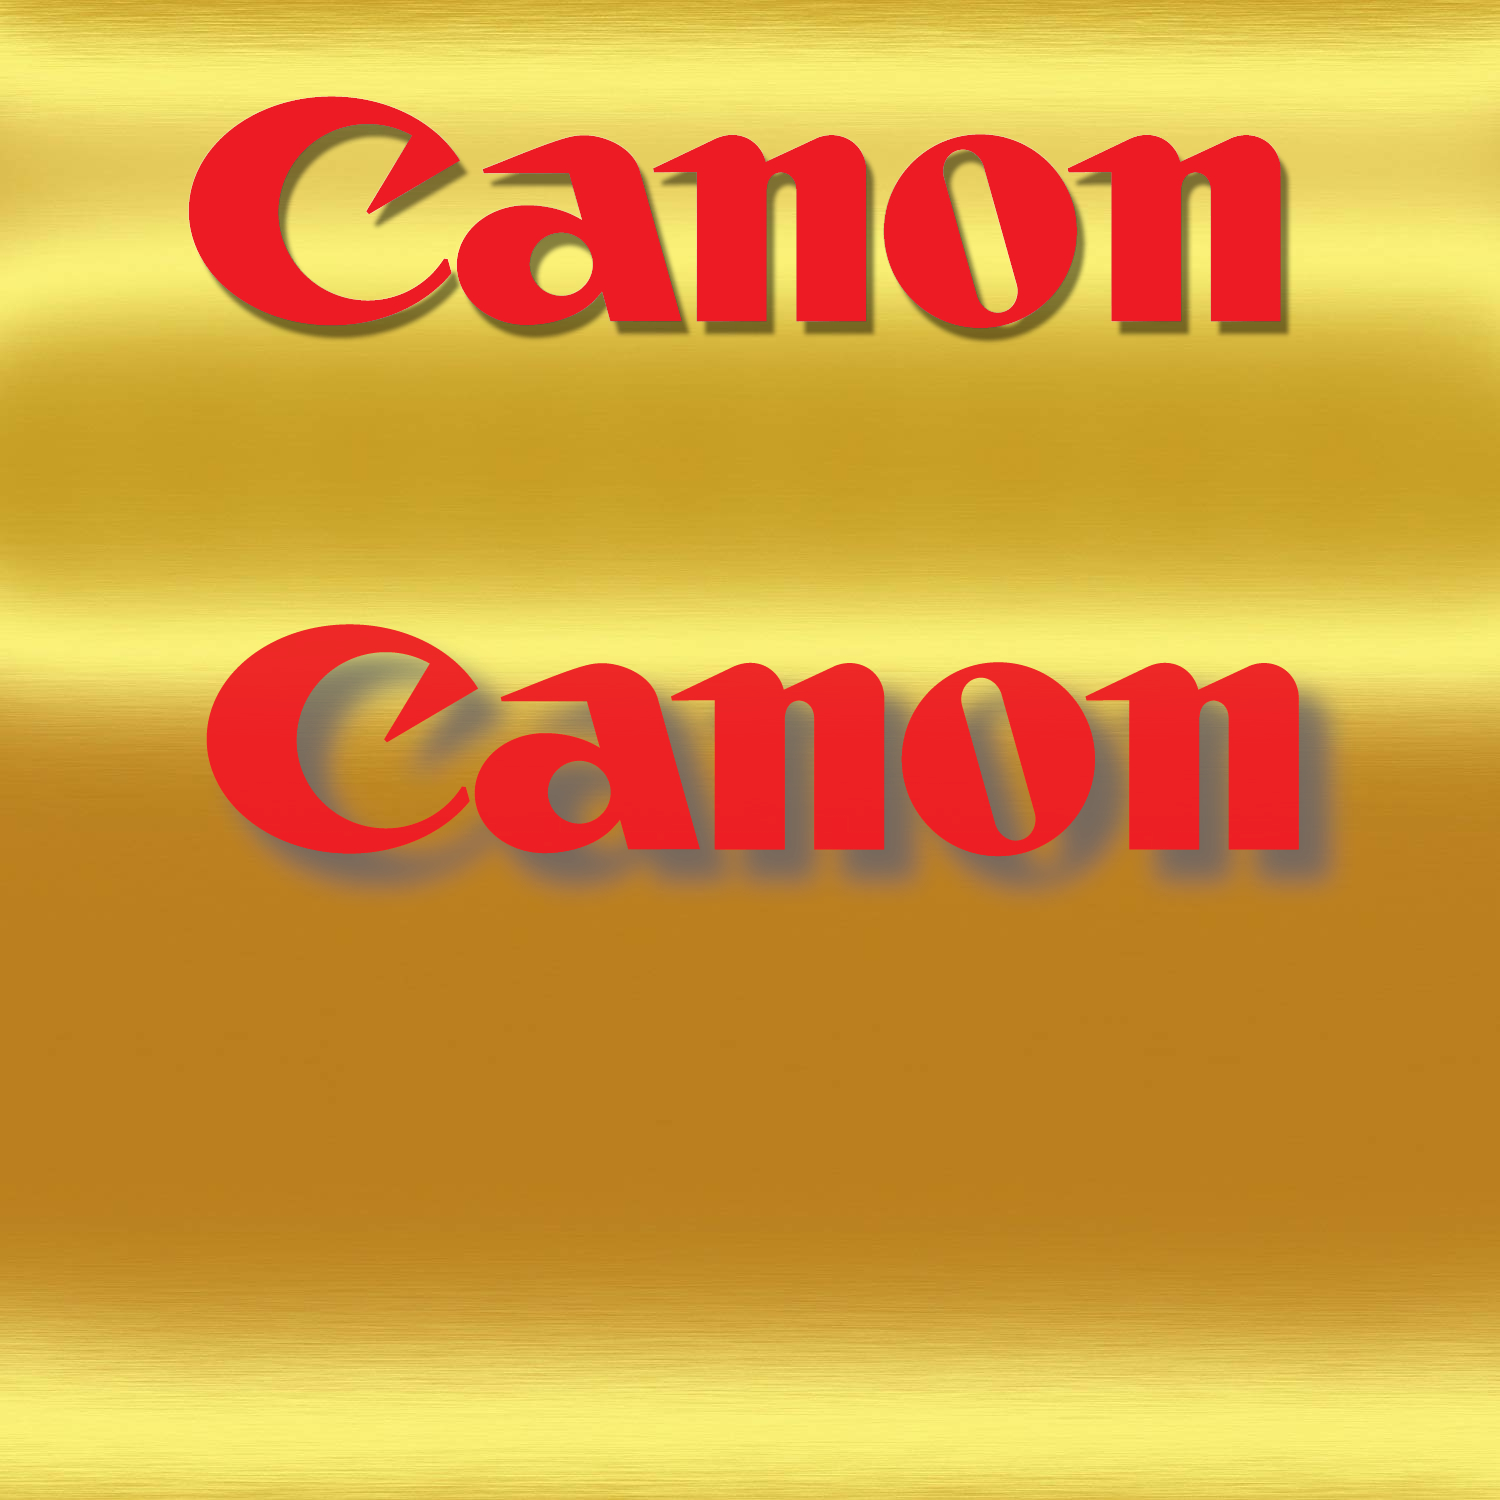 Cannon logo.jpg